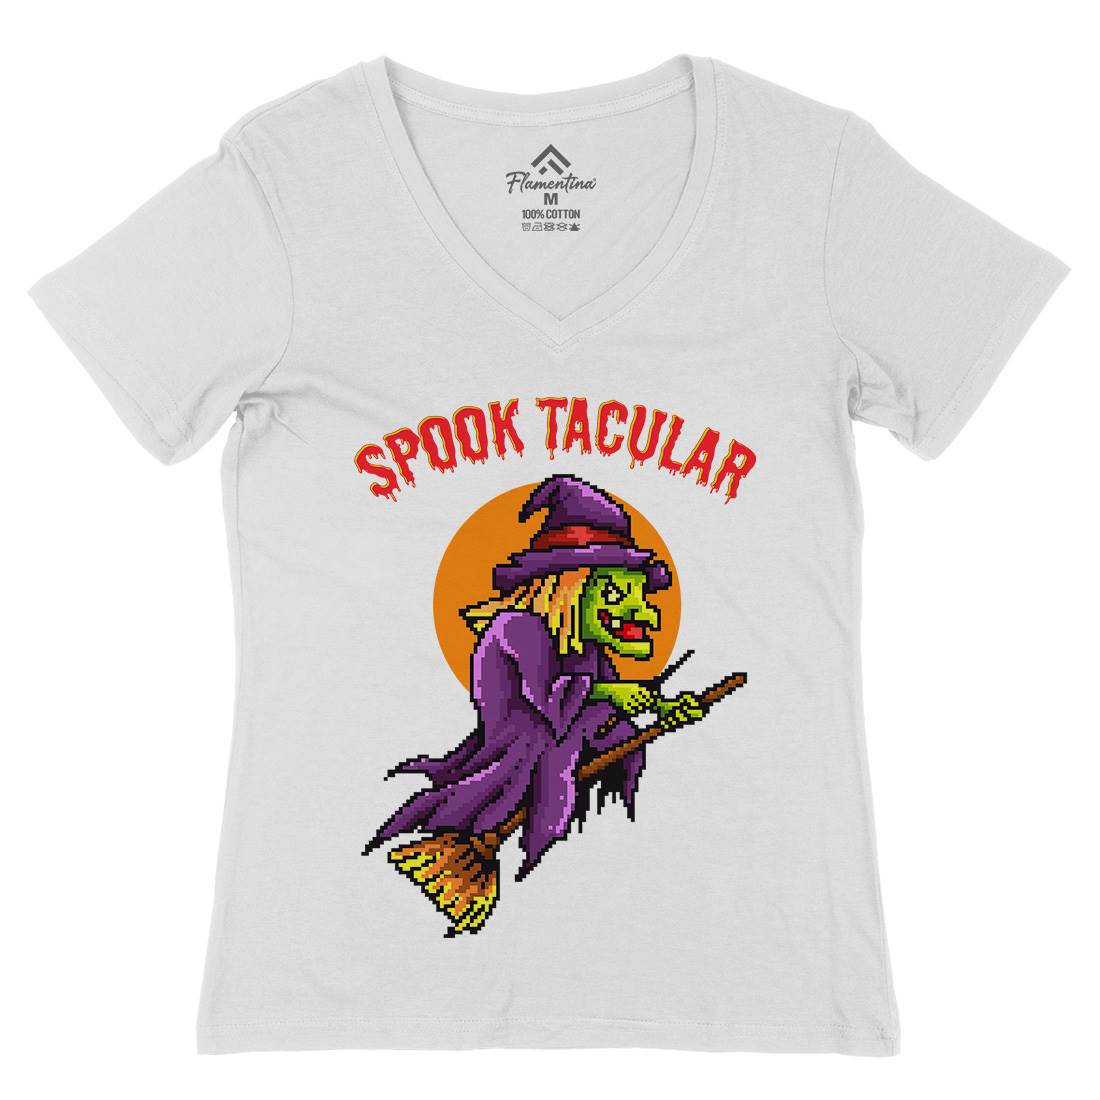 Spooktacular Witch Womens Organic V-Neck T-Shirt Horror B958